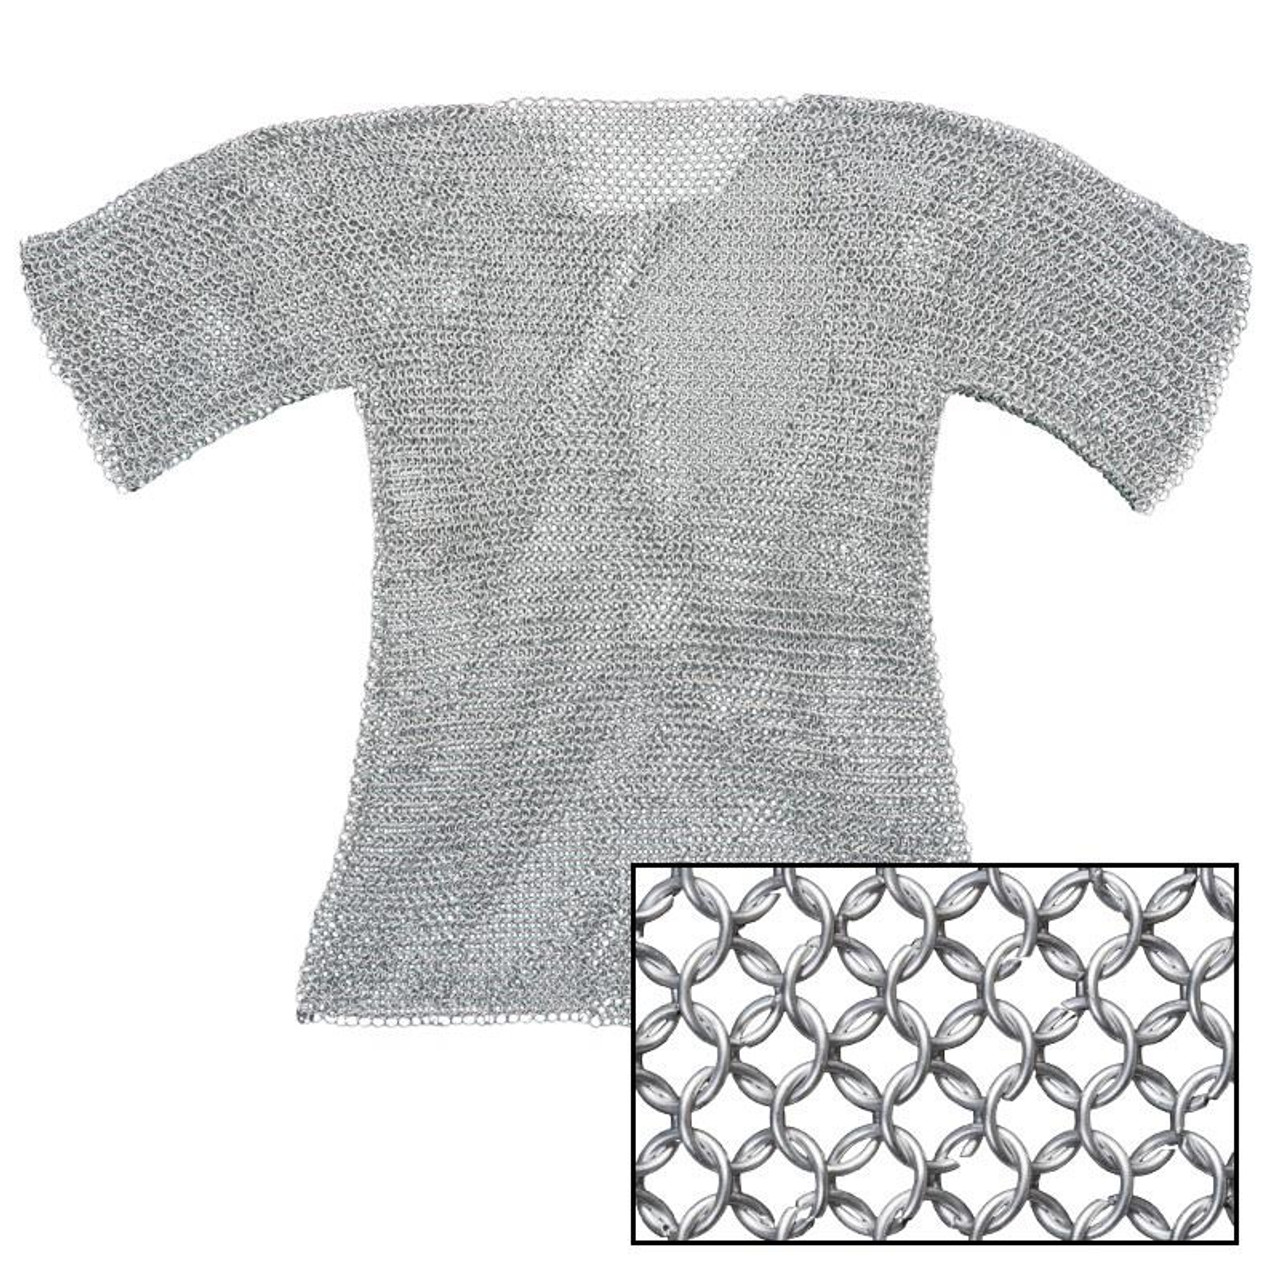 Half Sleeves Shirt Haubergeon Butted Aluminium L 10mm 16G